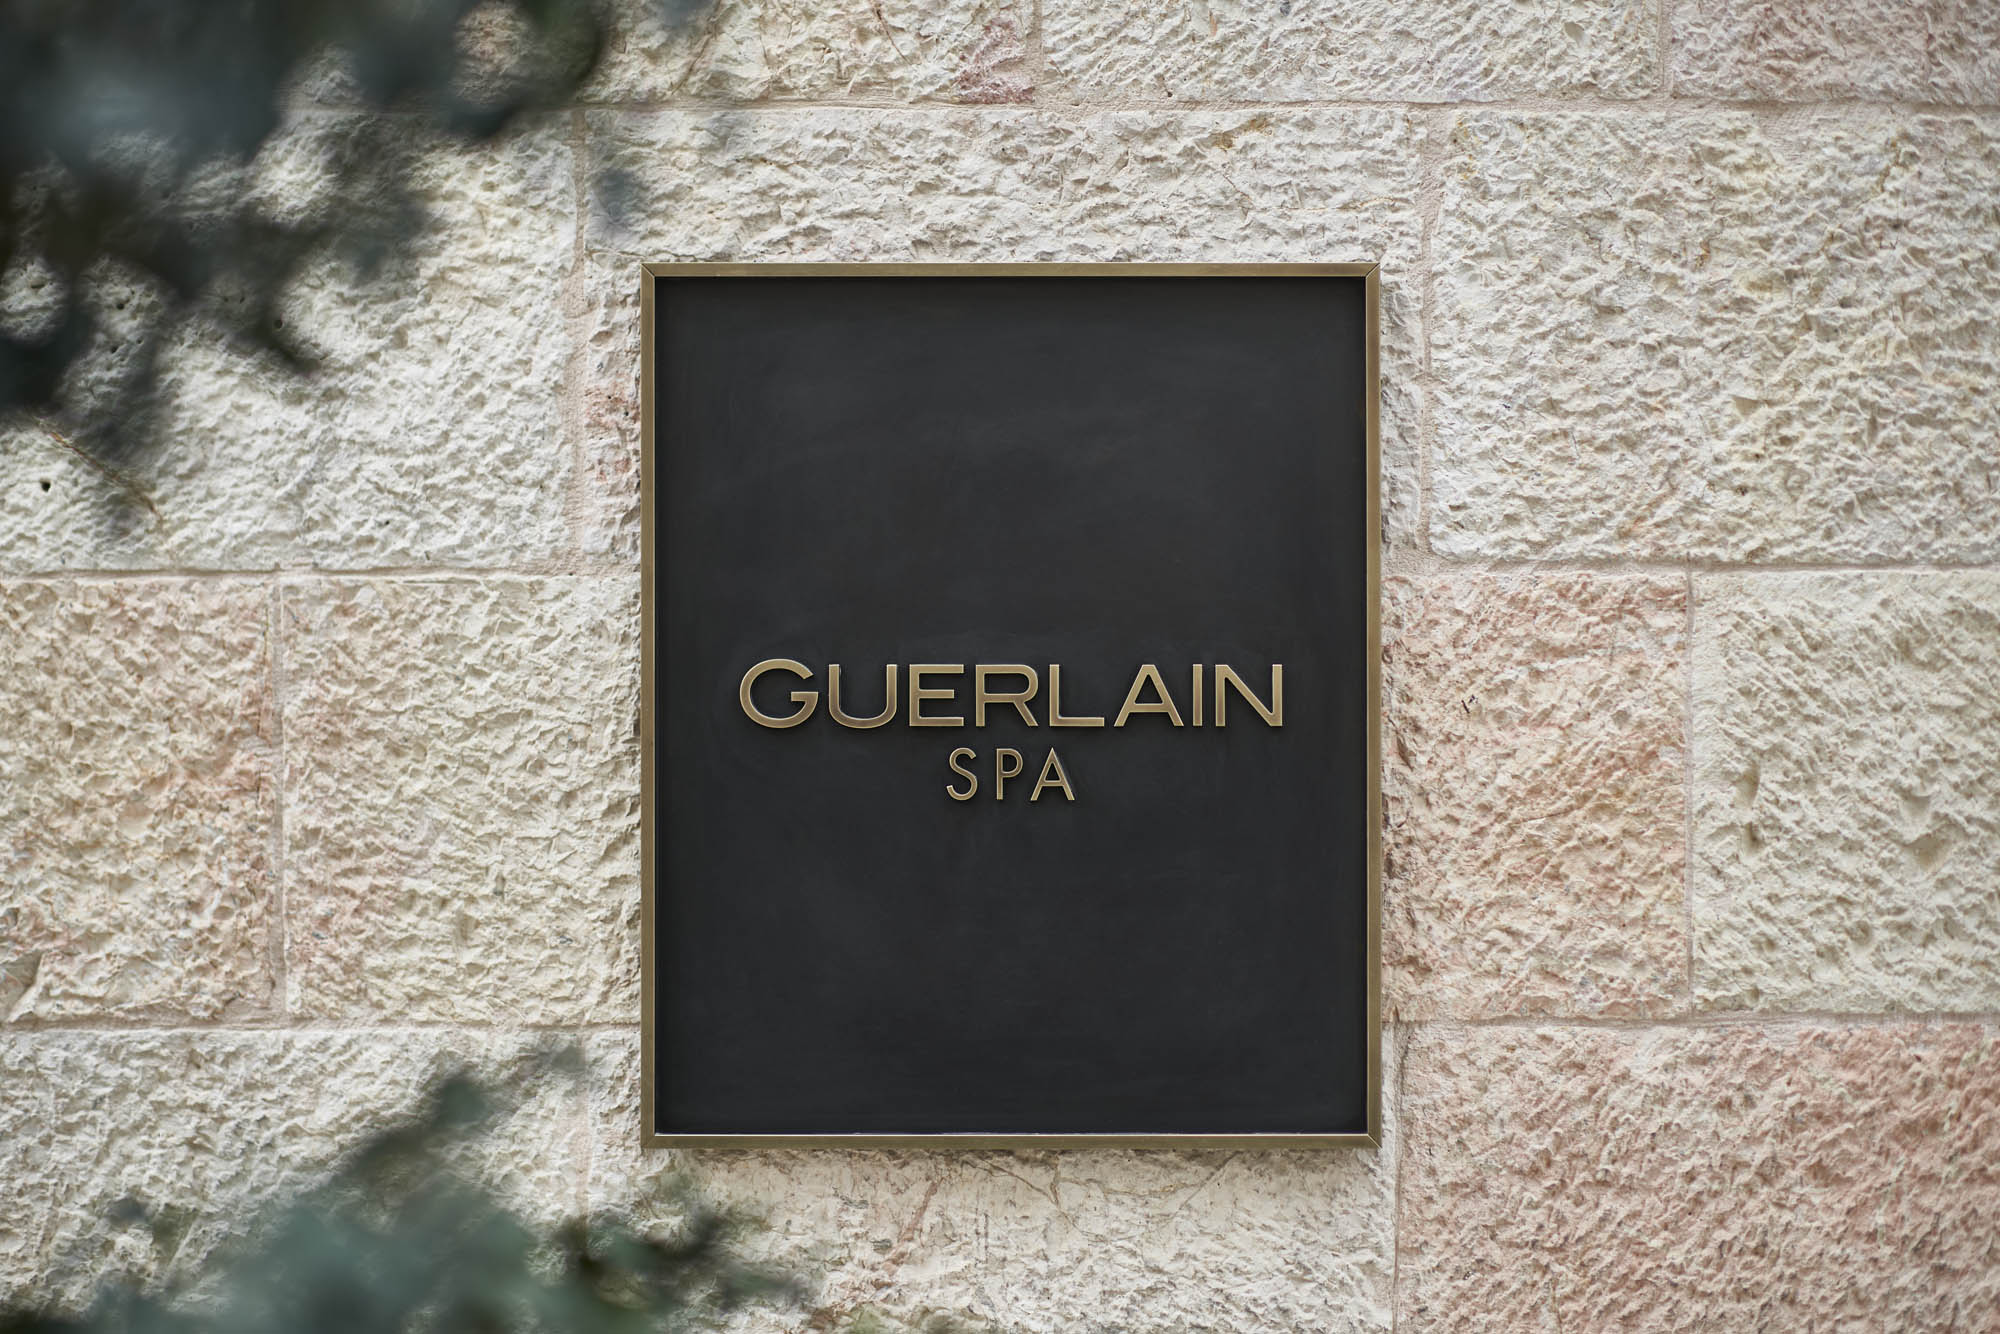 Guerlain SPA at the Waldorf Astoria in Jerusalem